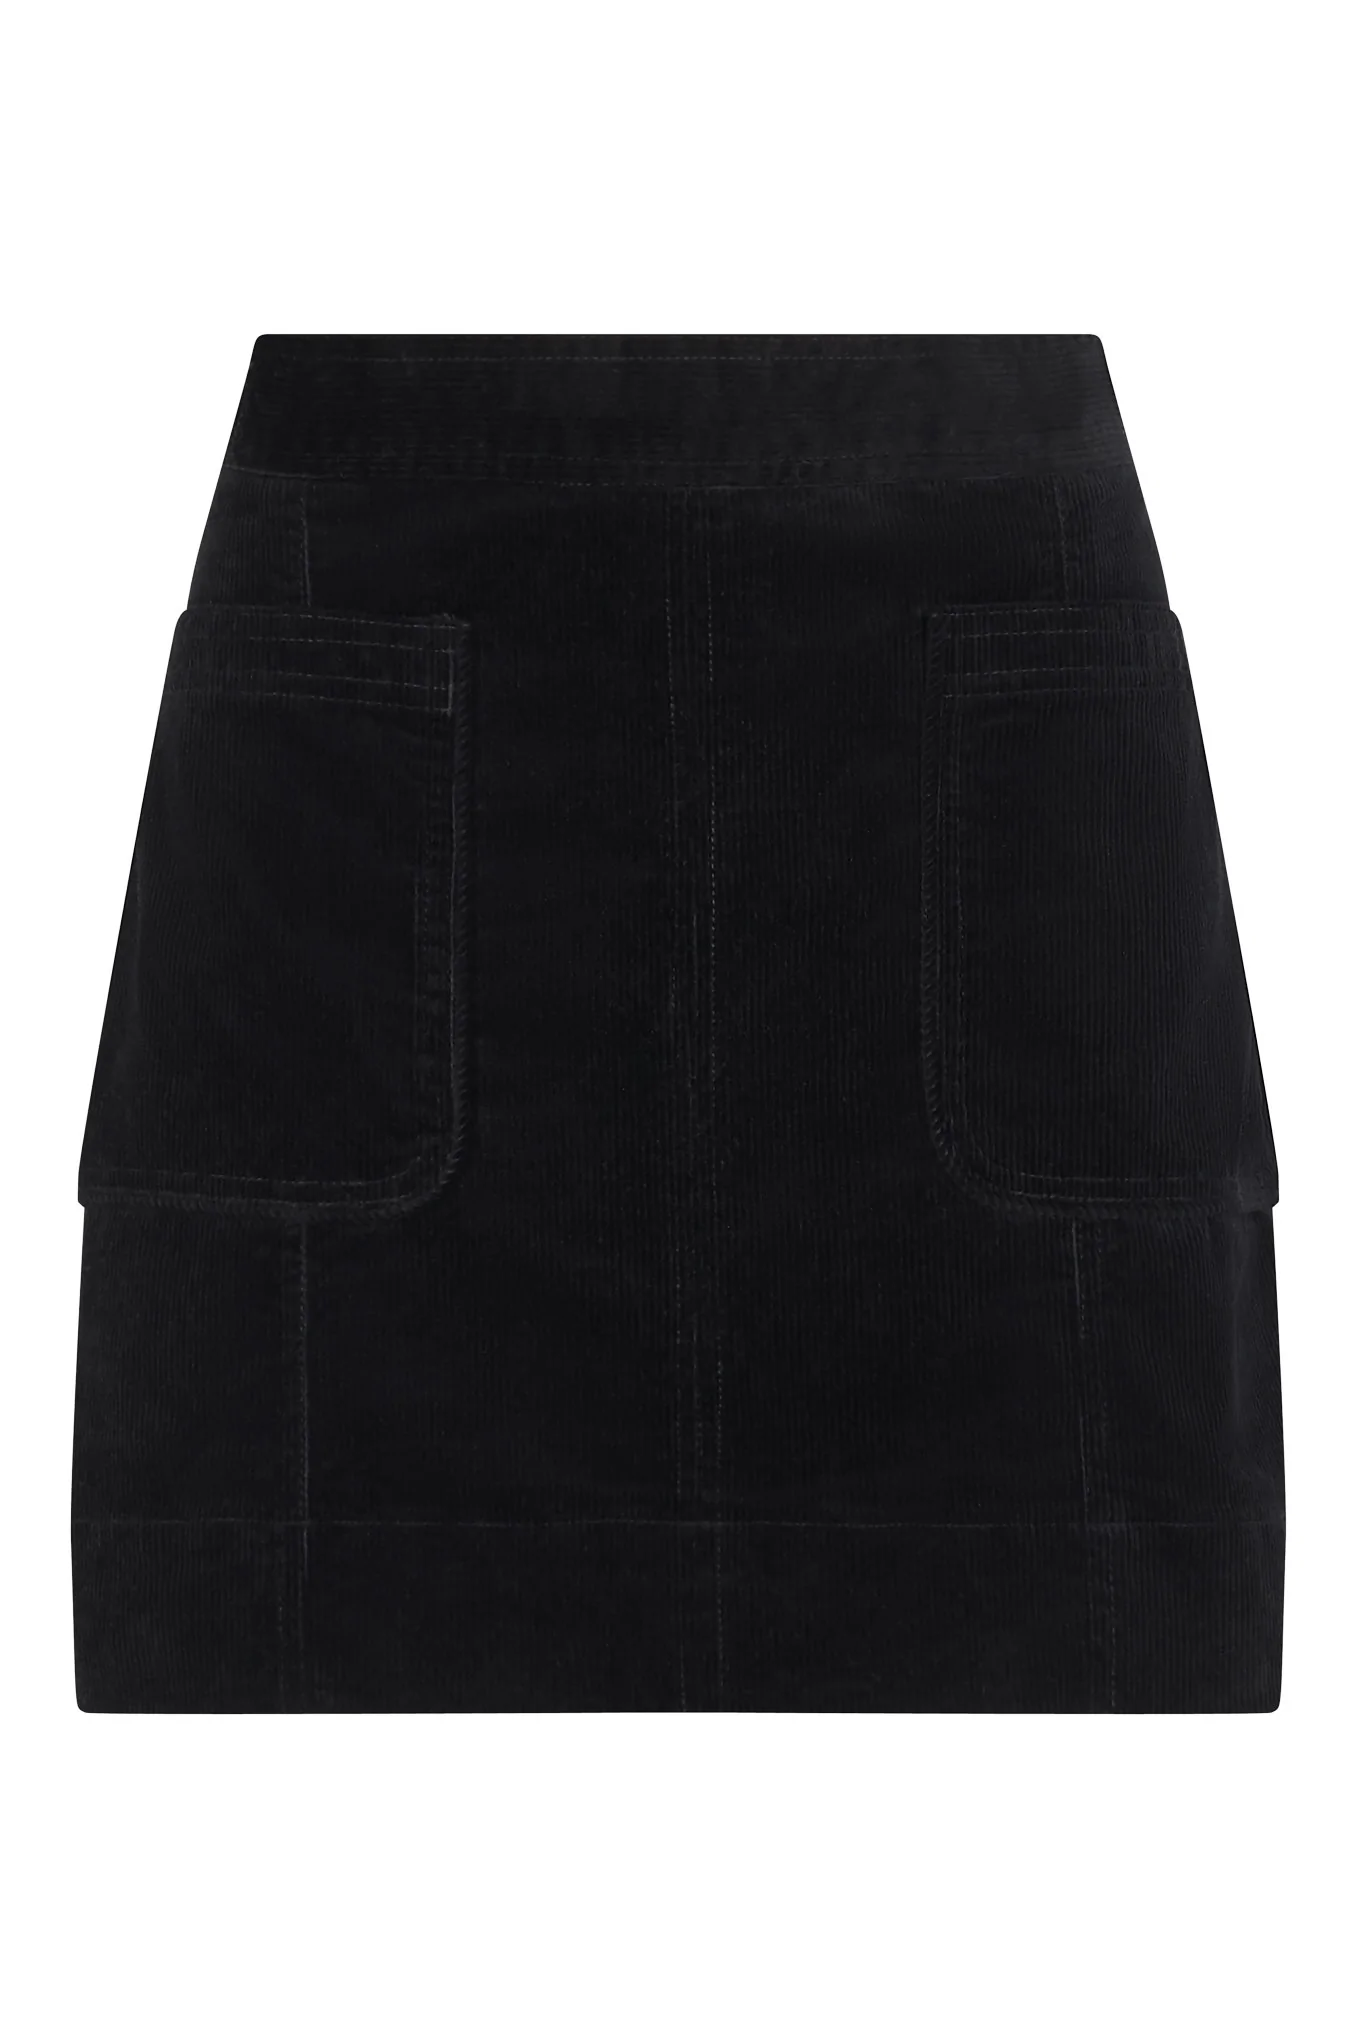 Komodo Black Corduroy Suki Mini Skirt 